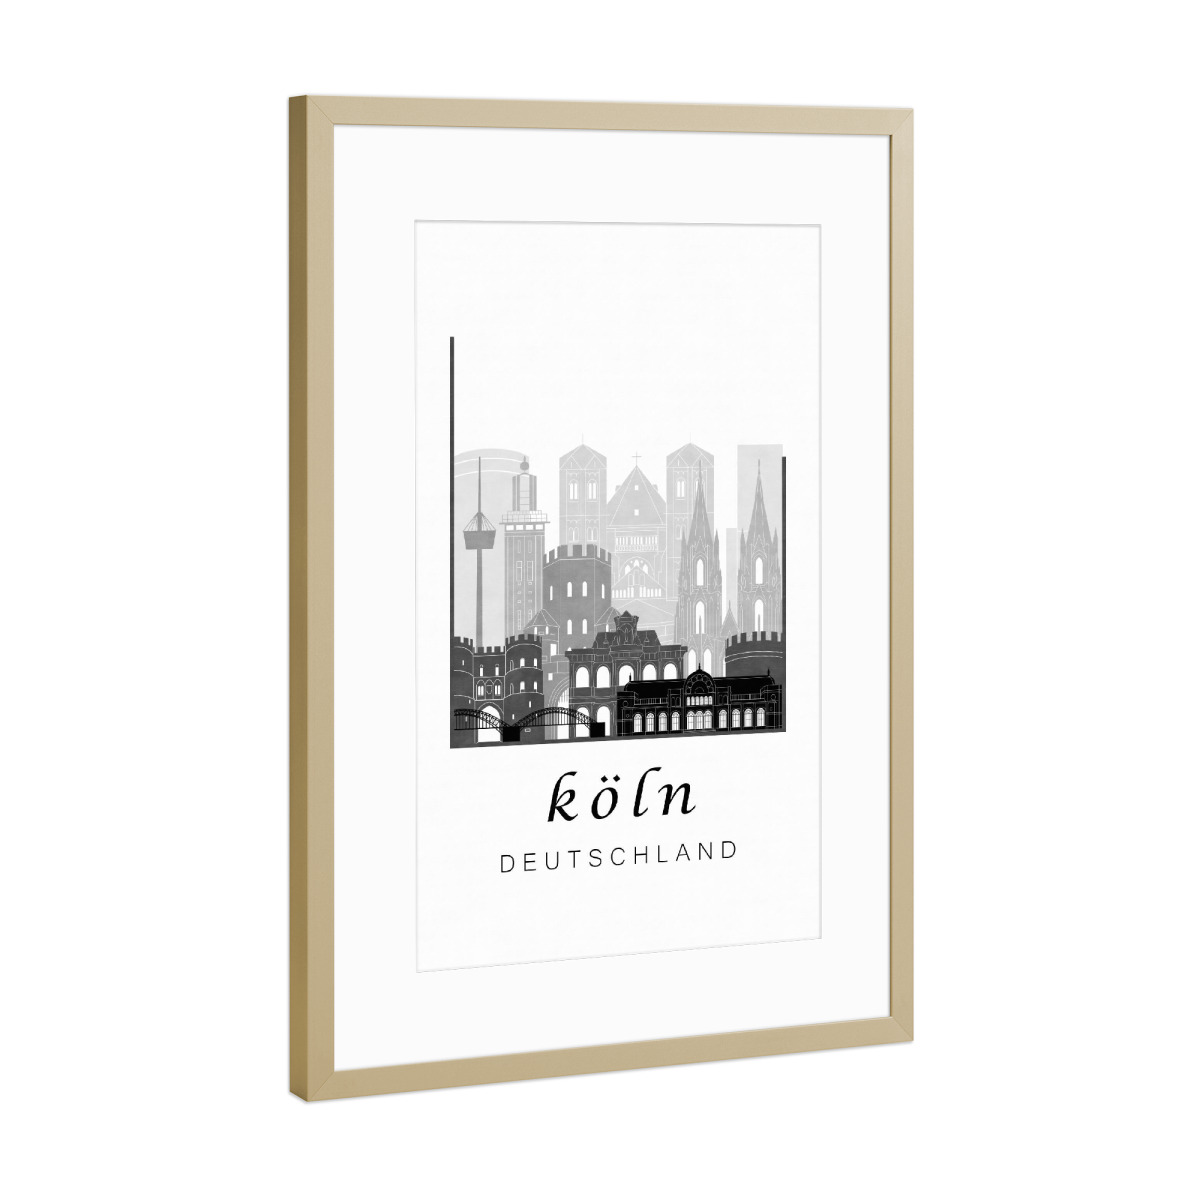 Cologne Skyline Black White Als Metal Framed Poster Bei Artboxone Kaufen